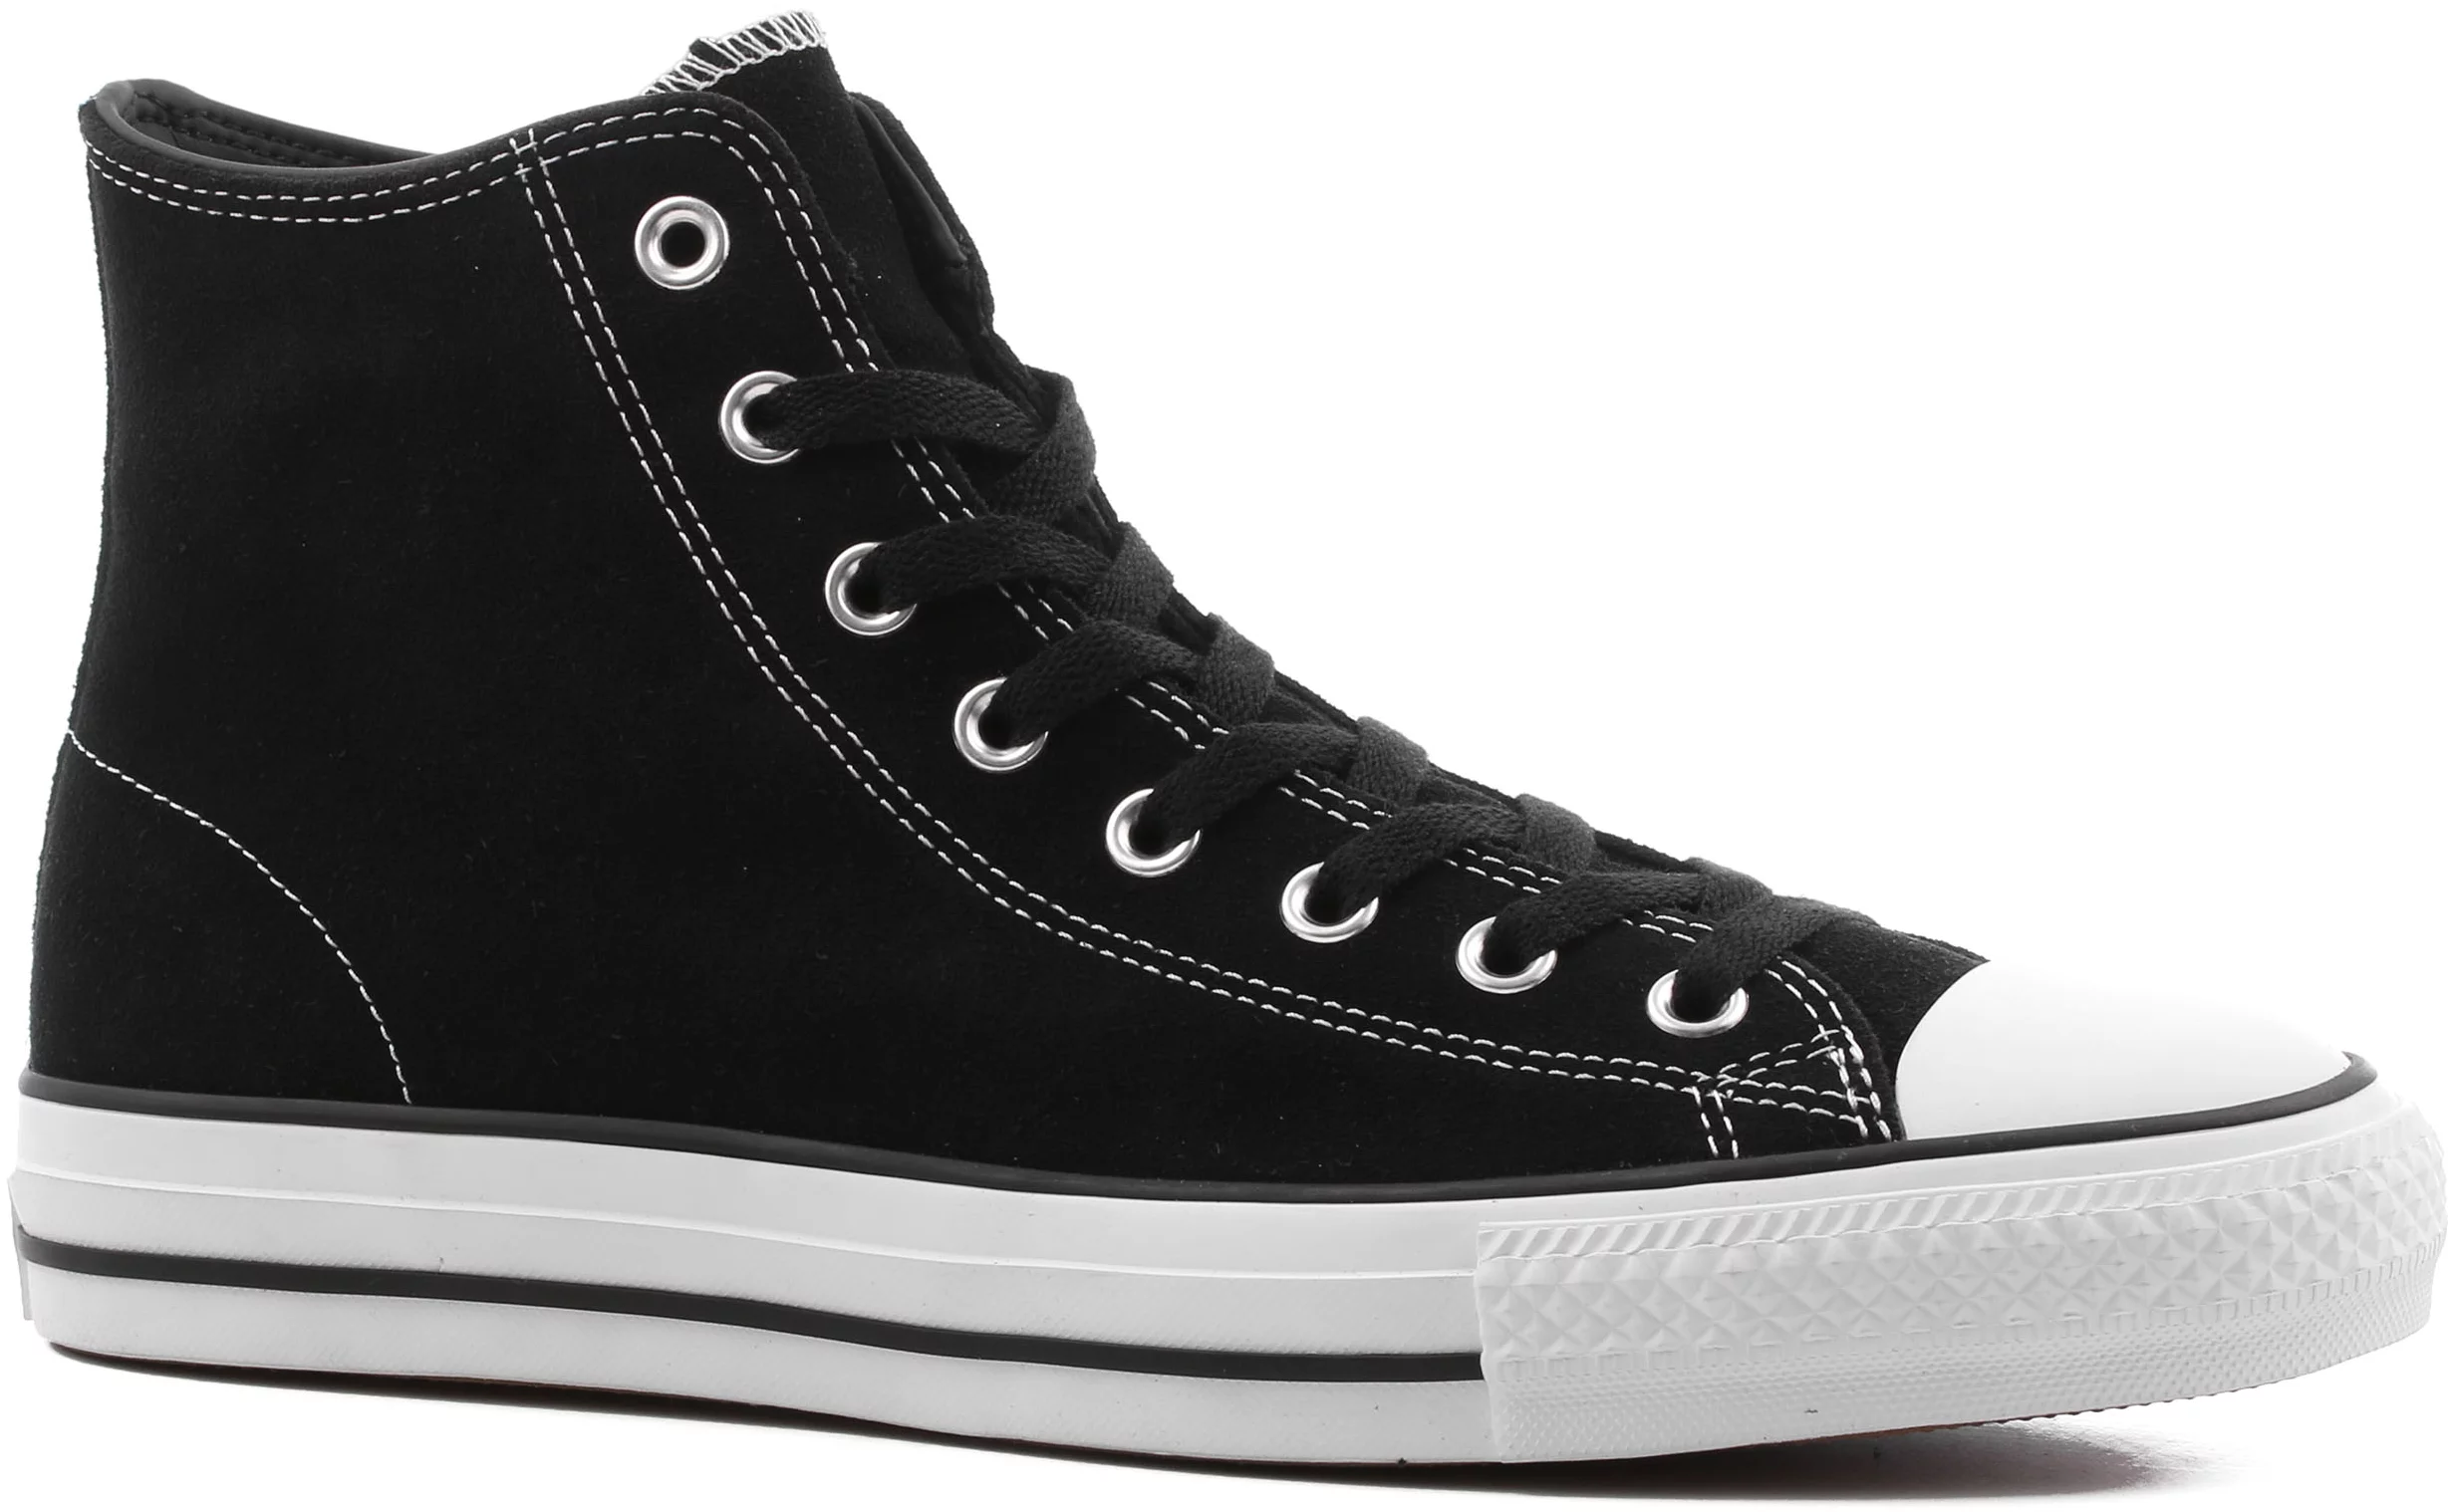 Converse Chuck Taylor All Star Pro High Skate Shoes - black/black/white | Tactics